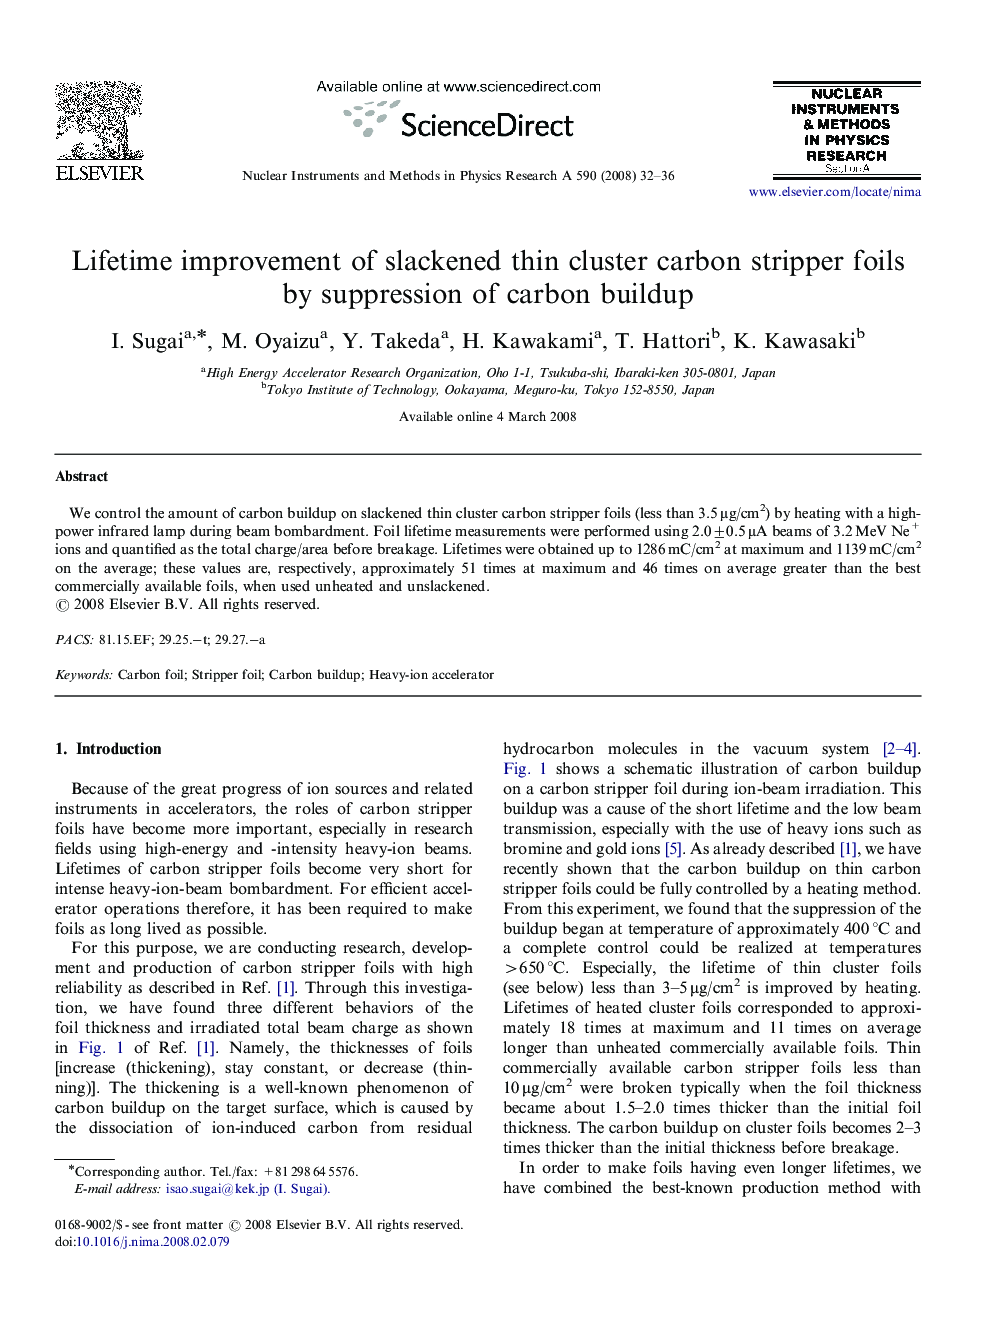 Lifetime improvement of slackened thin cluster carbon stripper foils by suppression of carbon buildup